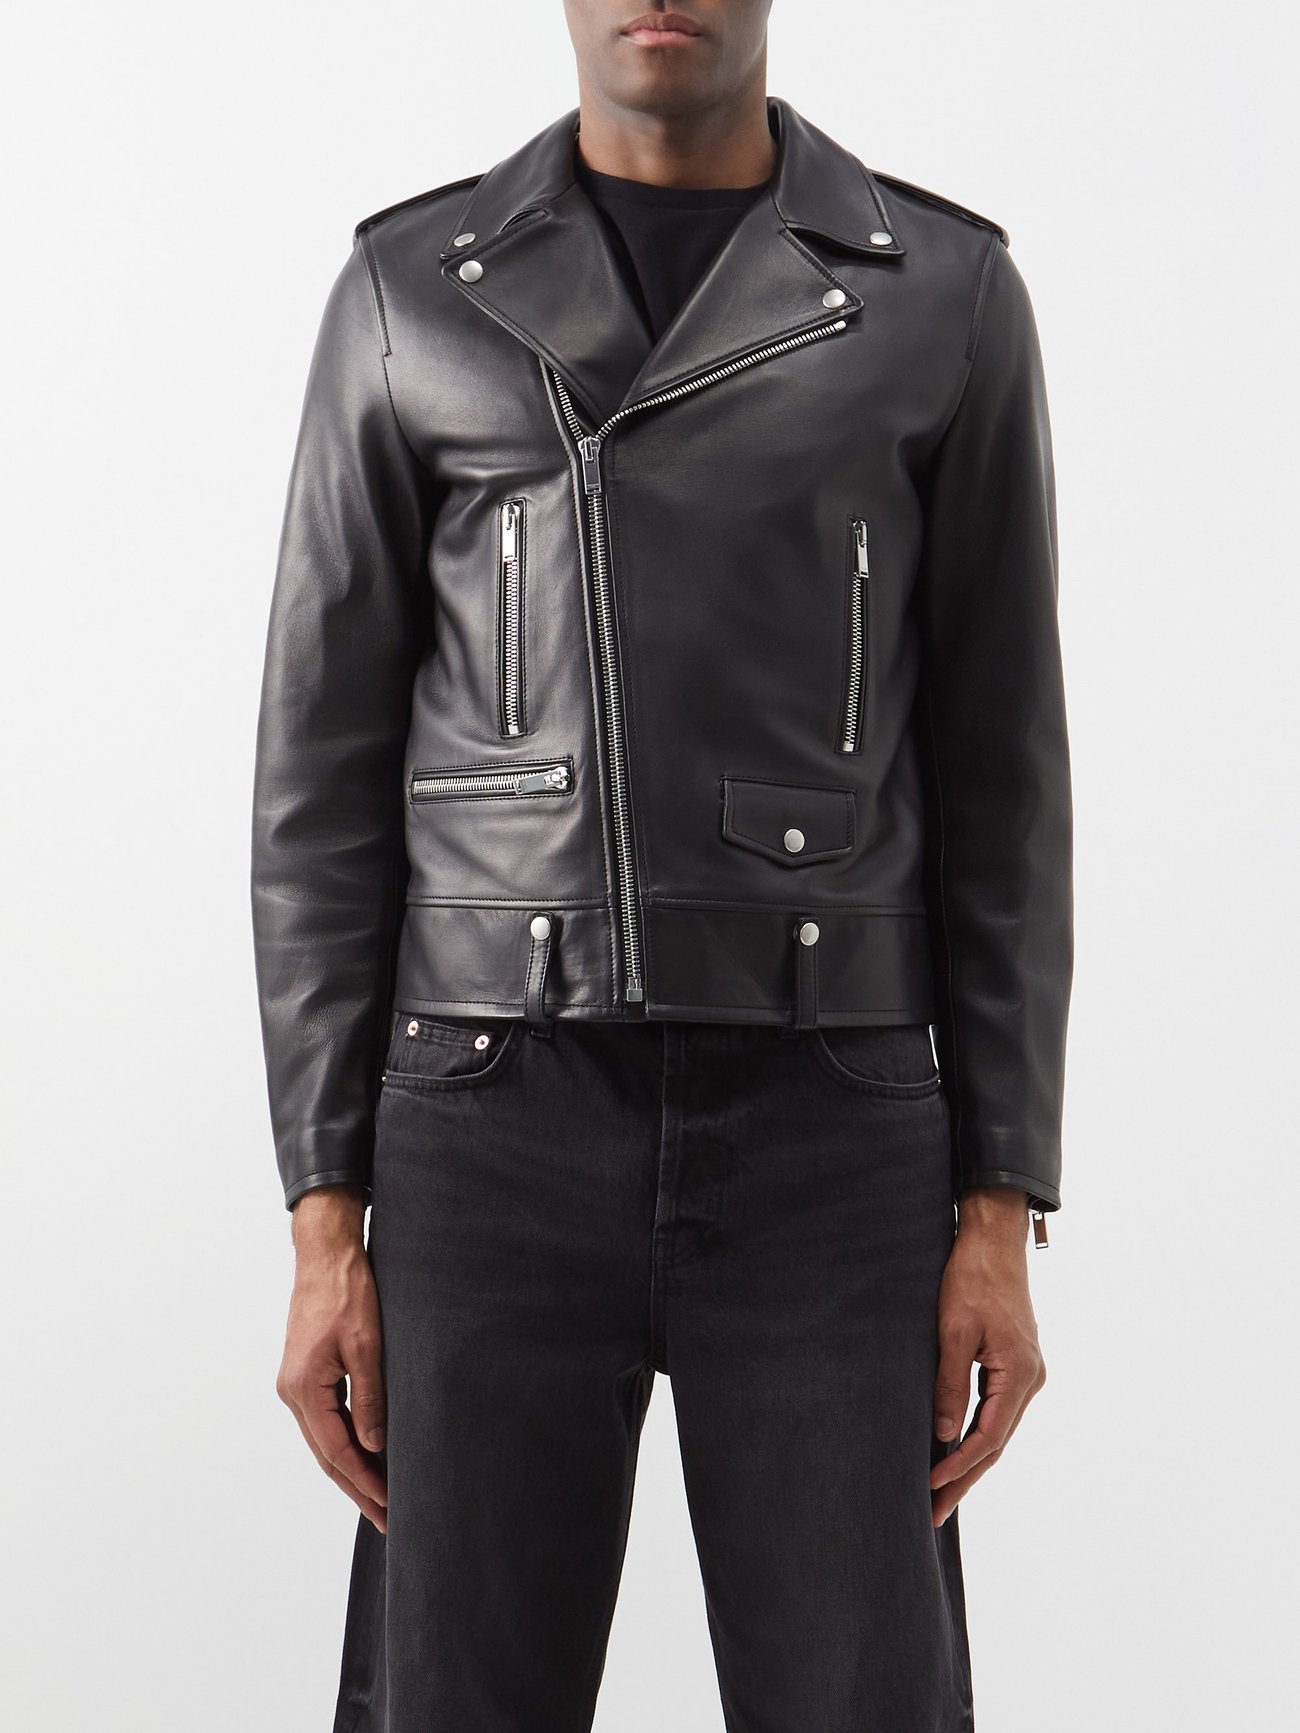 Gucci, Jackets & Coats, Biker Leather Studded Gucci Jacket